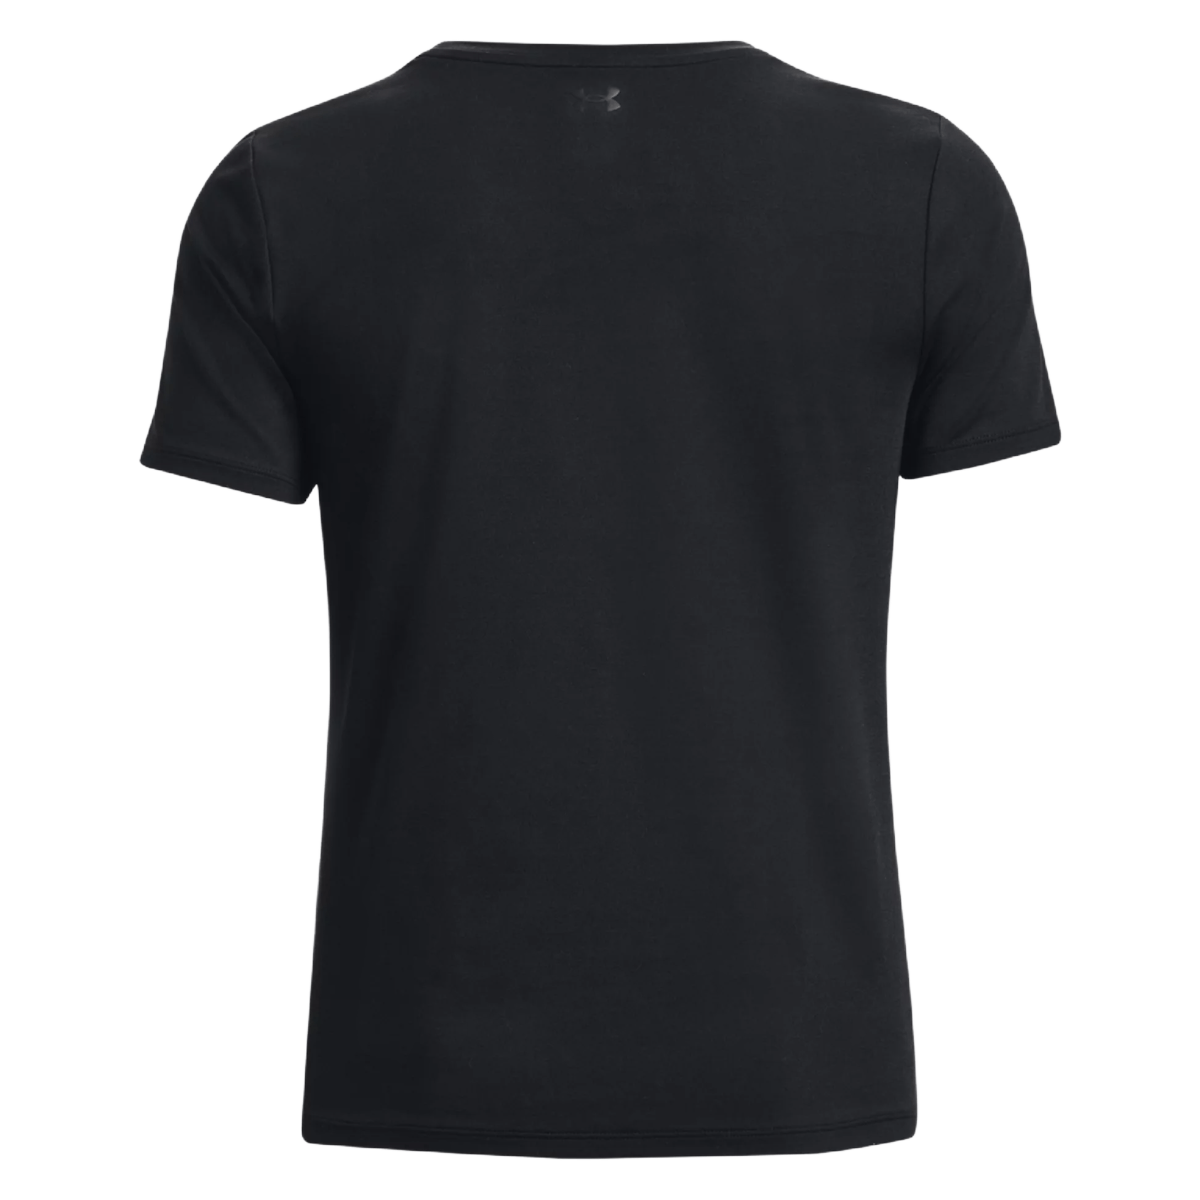  UA Meridian SS, Black - T-shirt short sleeve